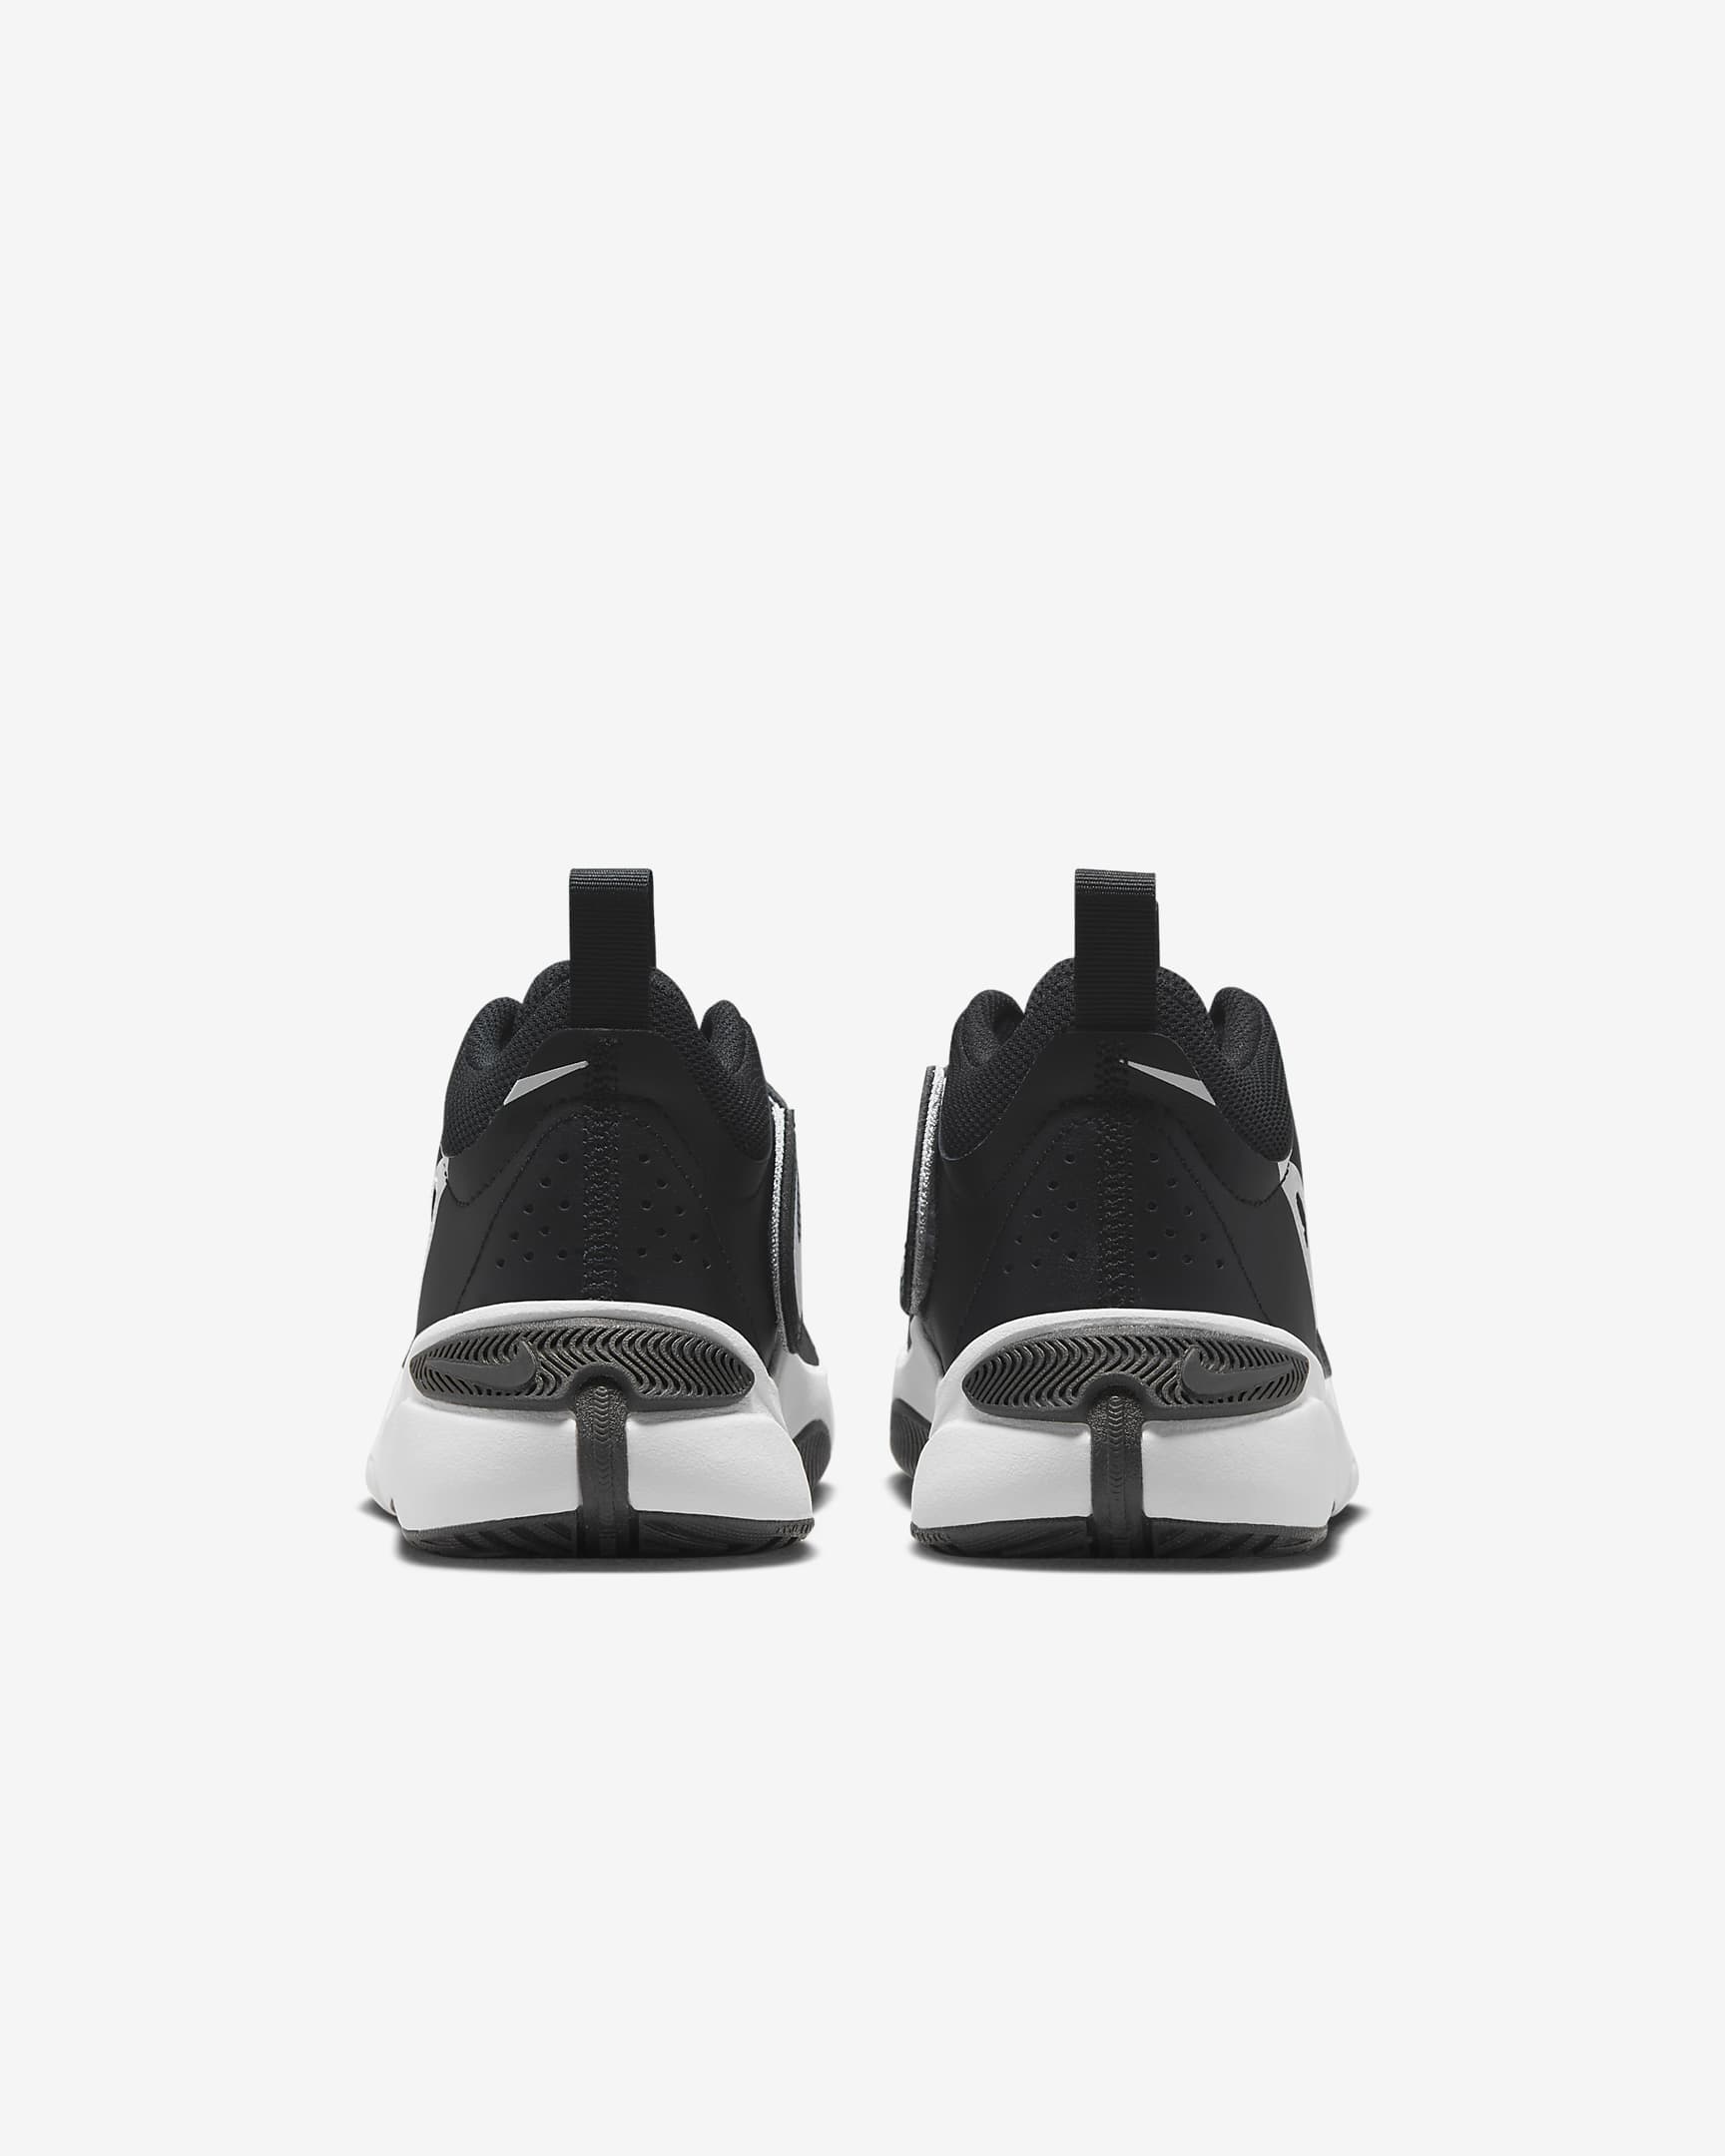 Nike Team Hustle D 11 Older Kids' Basketball Shoes - Black/White